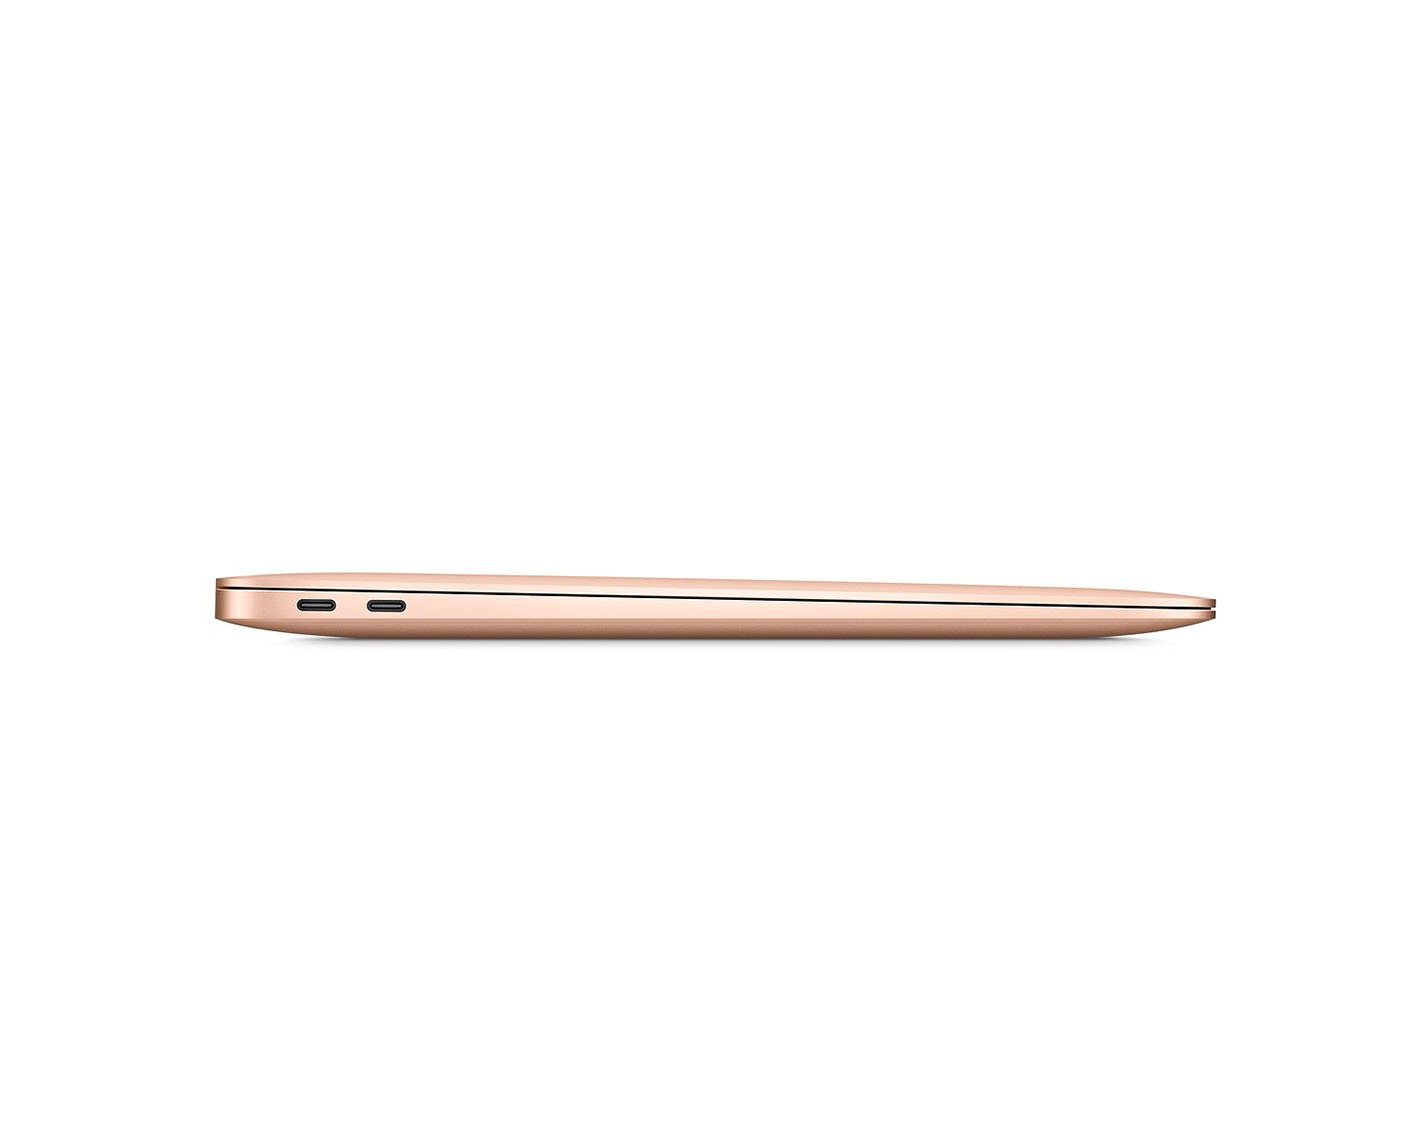 Macbook Air Retina - 2019 - i5 - 8GB - Gold